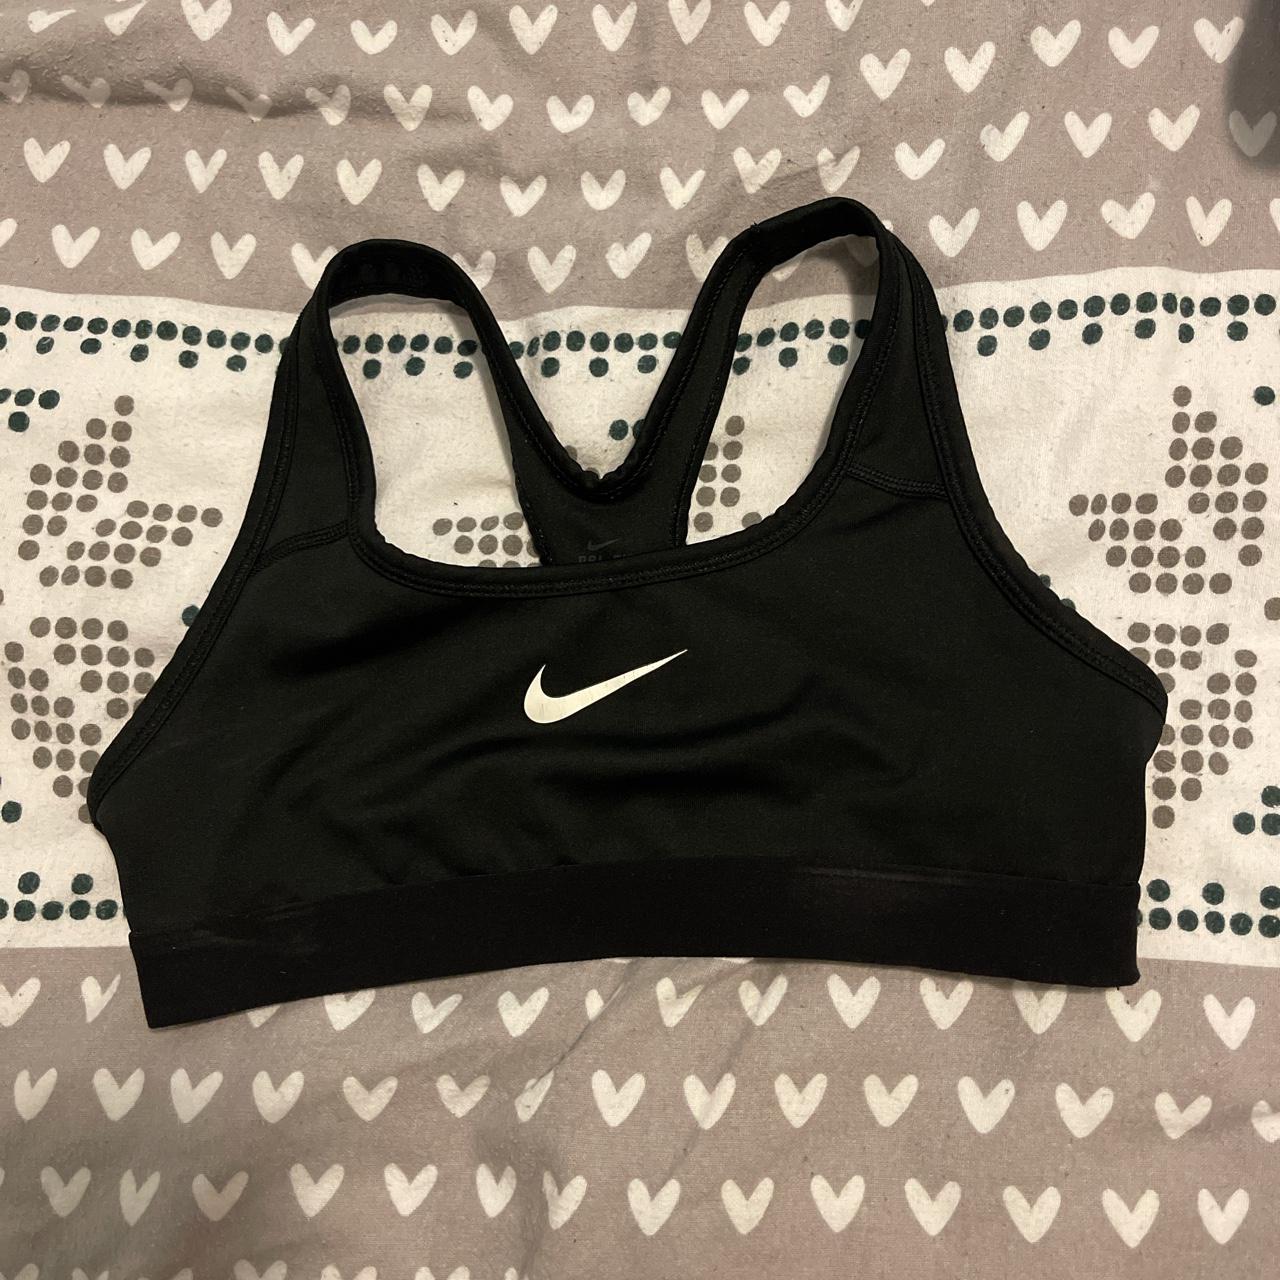 Product Image 1 - Women’s black Nike sports bra